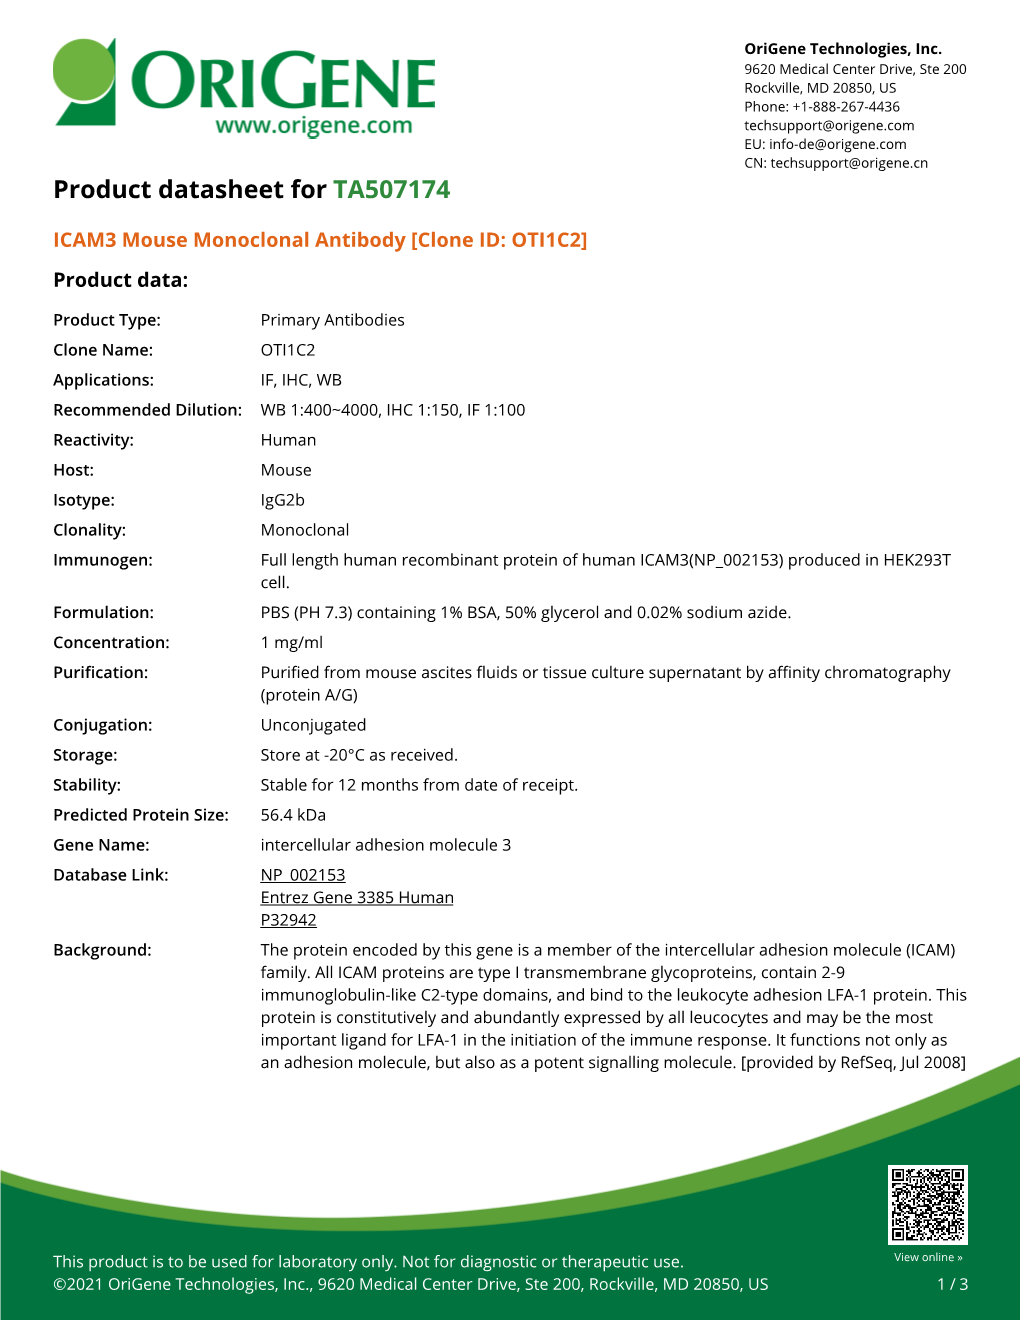 ICAM3 Mouse Monoclonal Antibody [Clone ID: OTI1C2] Product Data